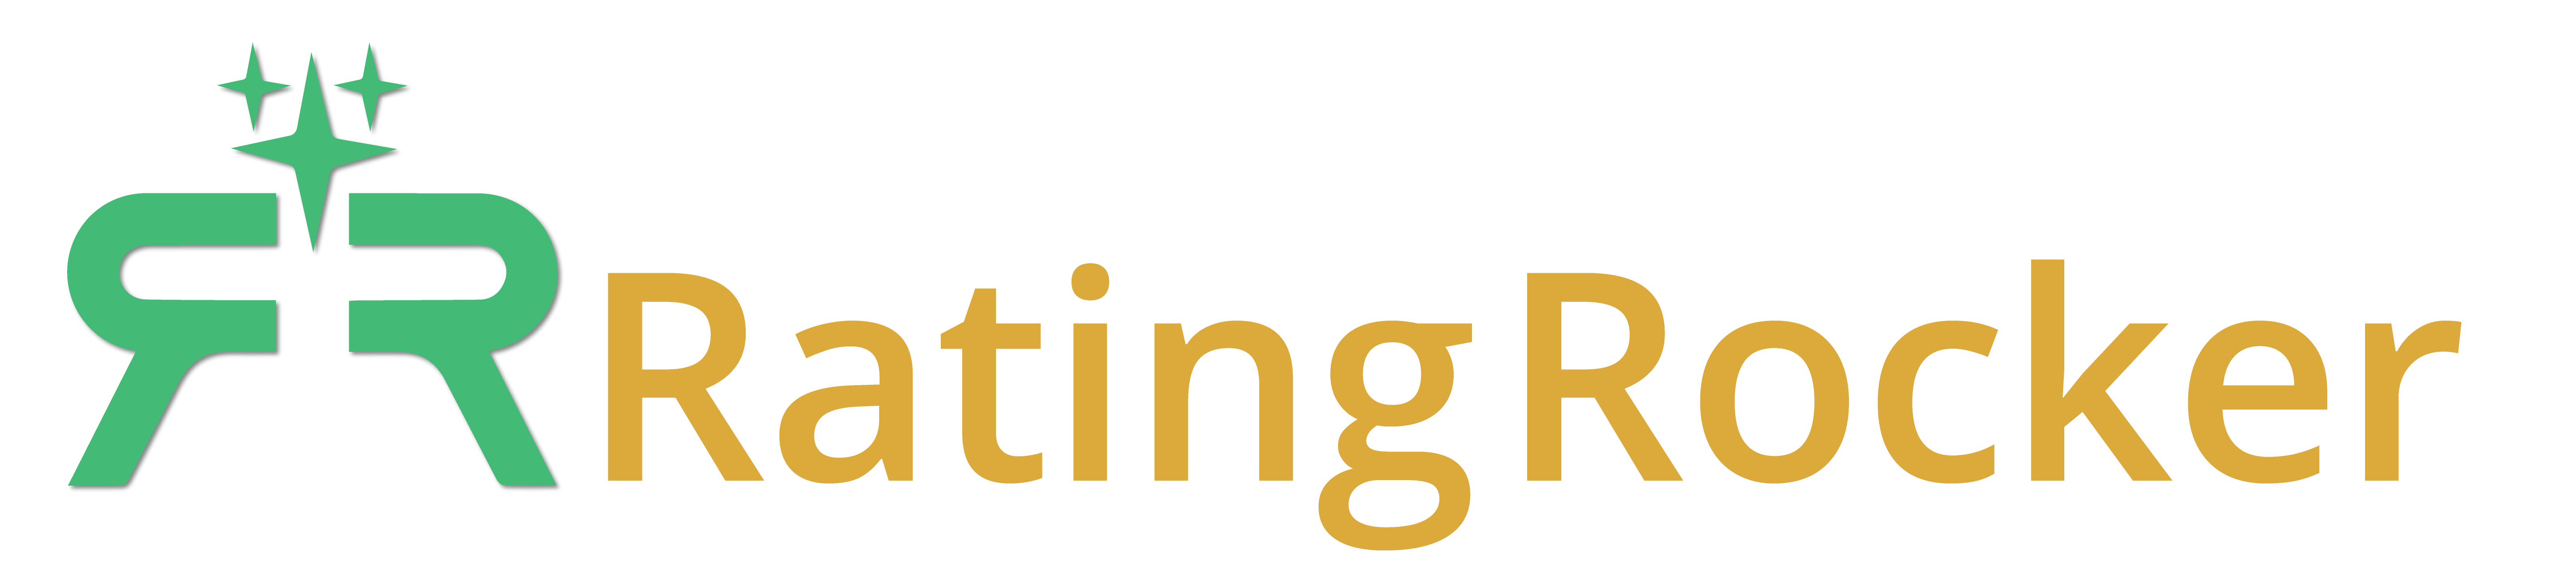 ratingrocker logo